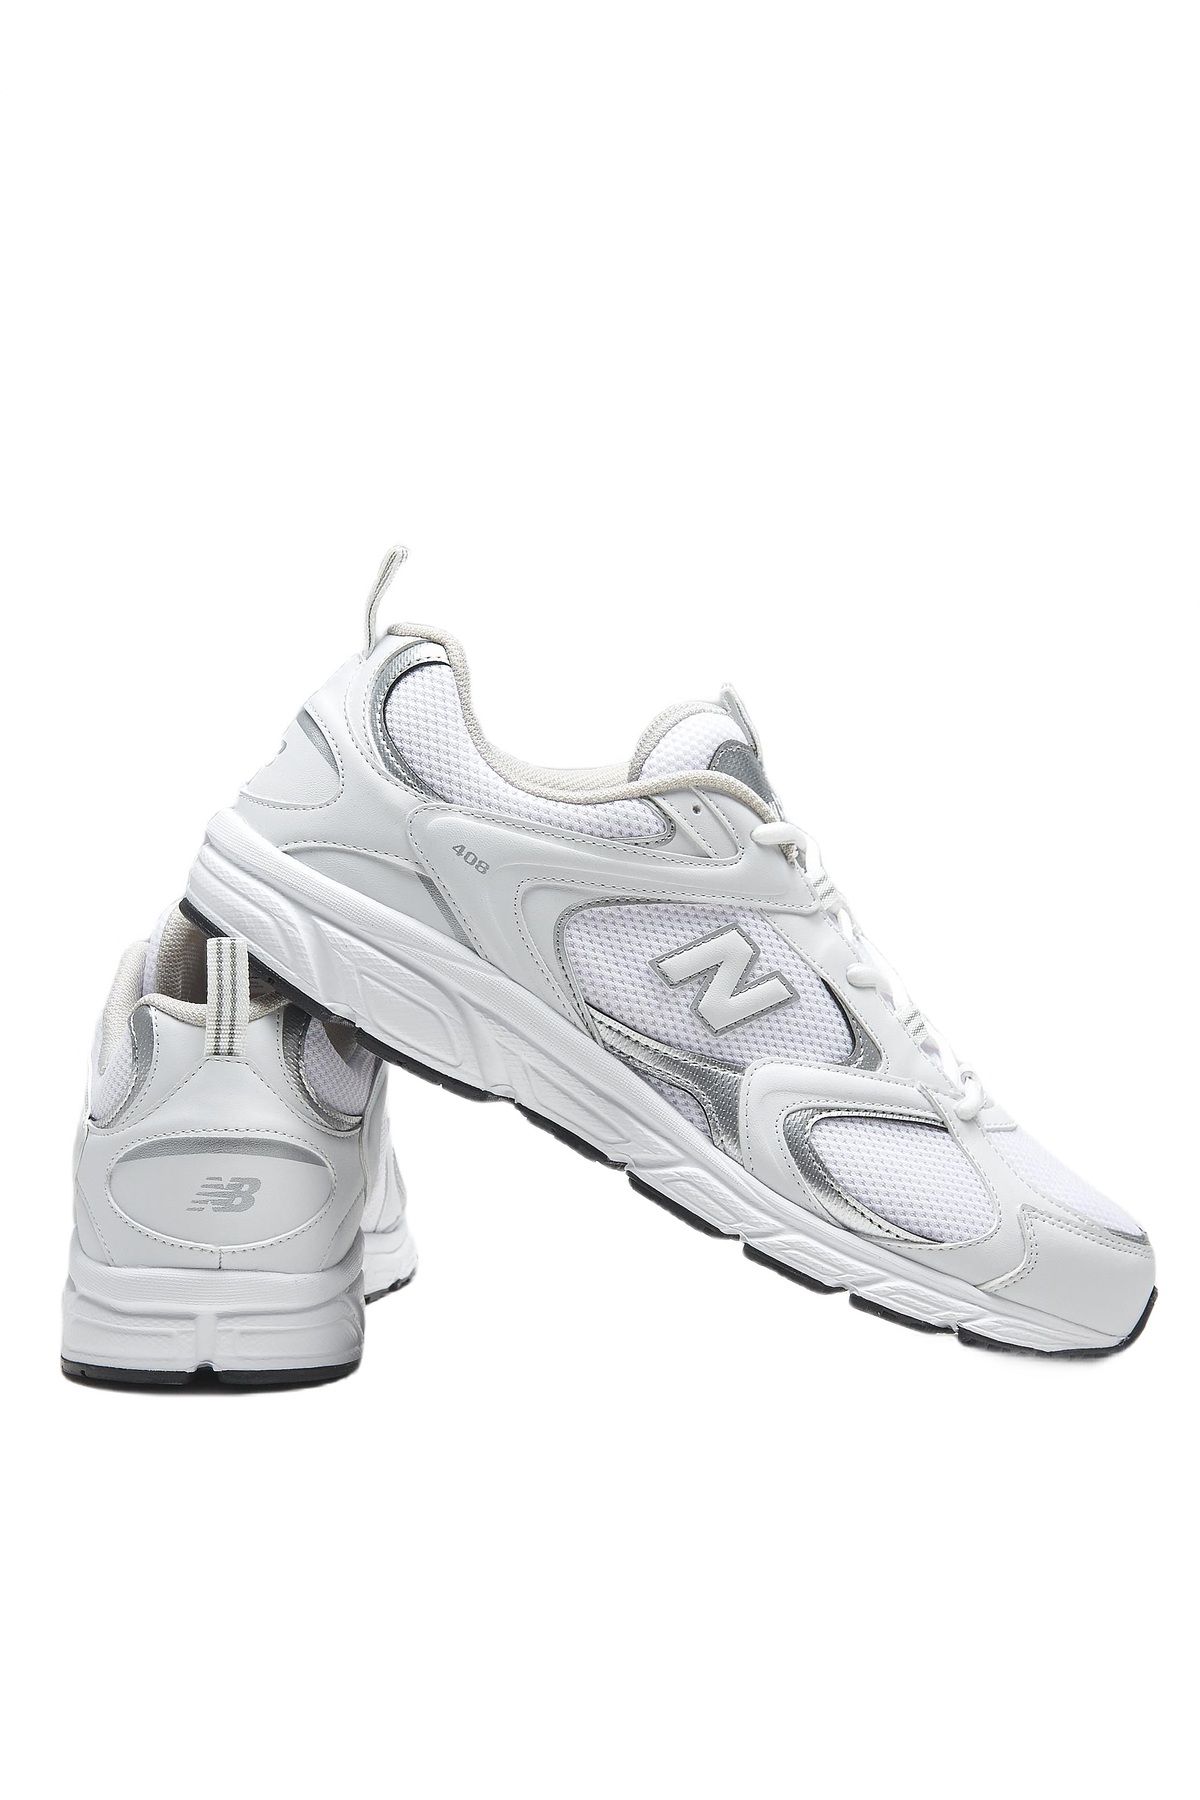 New Balance 408 White Silver Unisex Sneaker Spor Ayakkabı